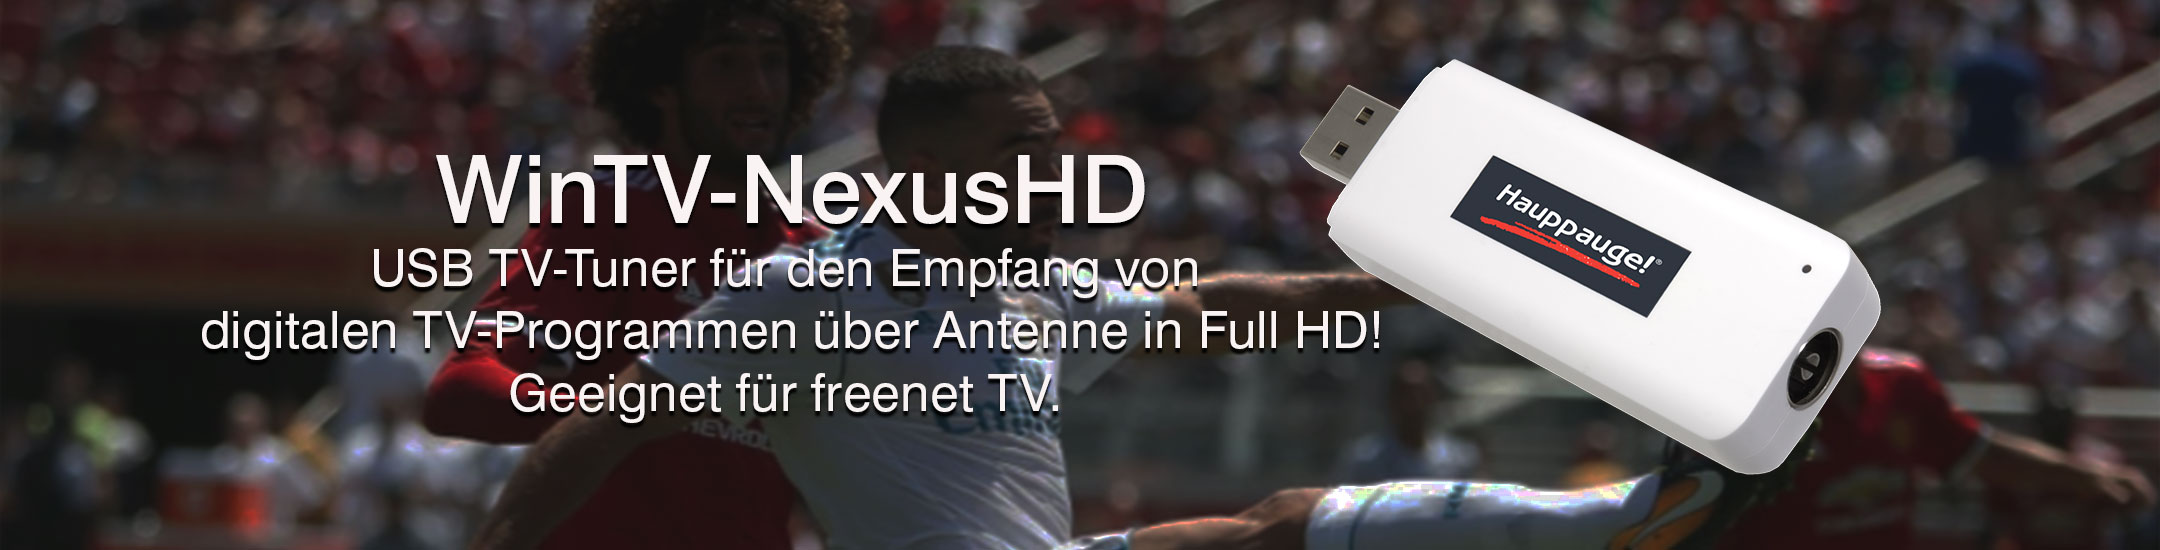 WinTV-NexusHD Banner